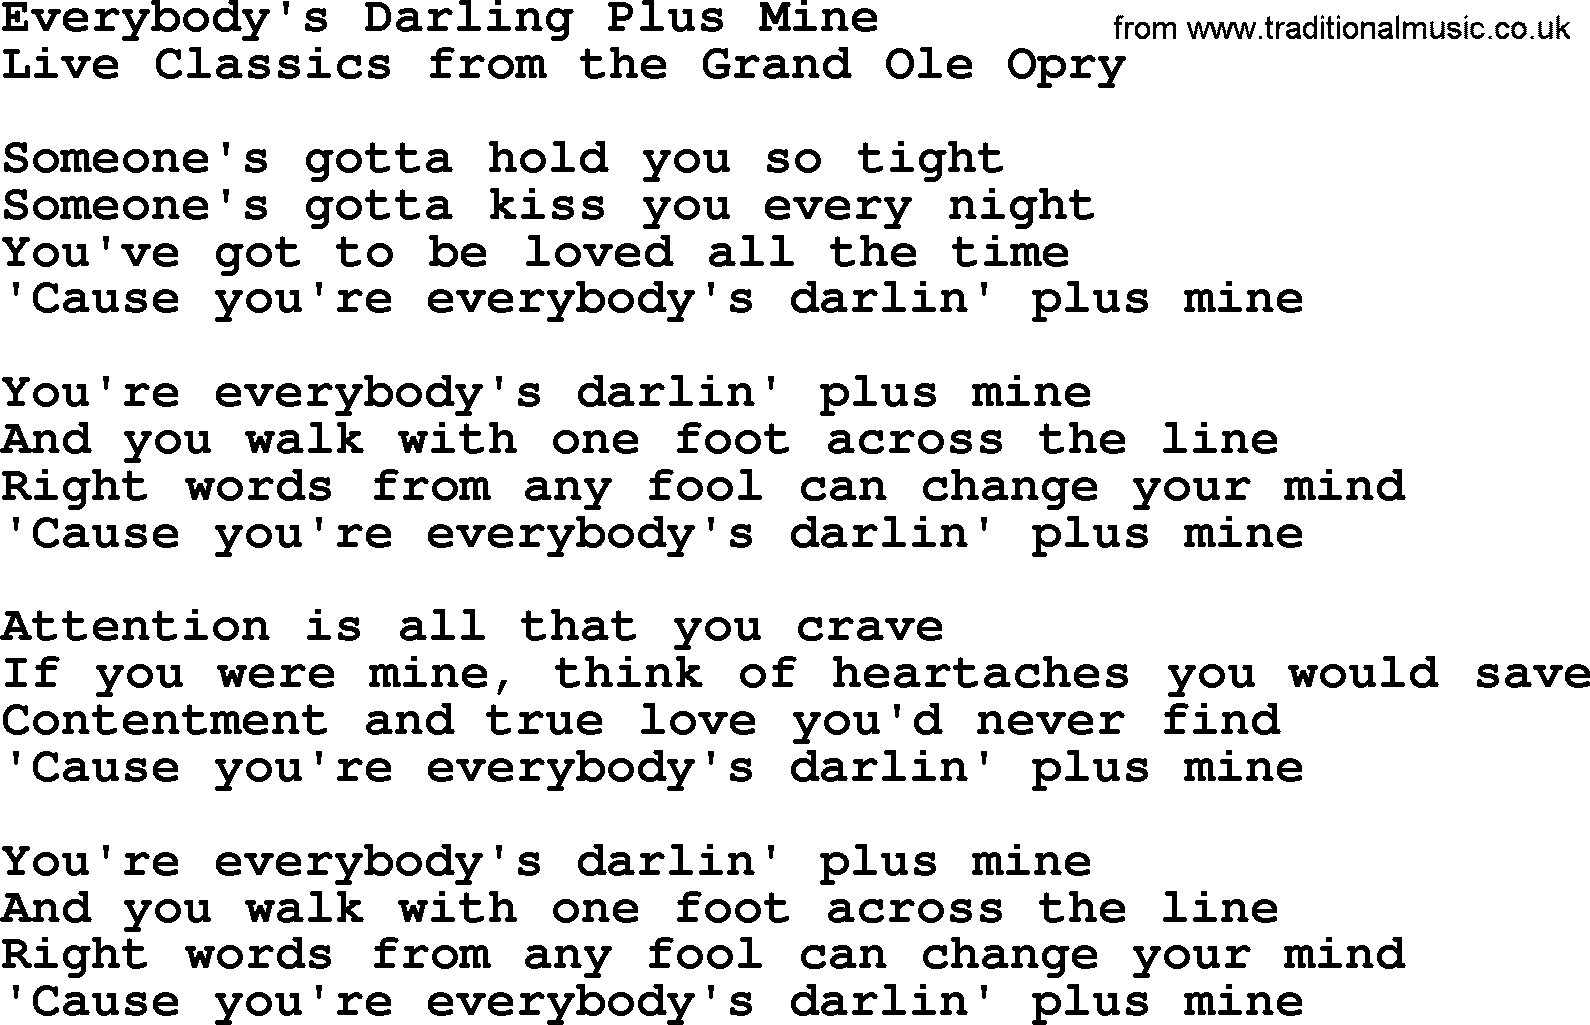 Marty Robbins song: Everybodys Darling Plus Mine, lyrics